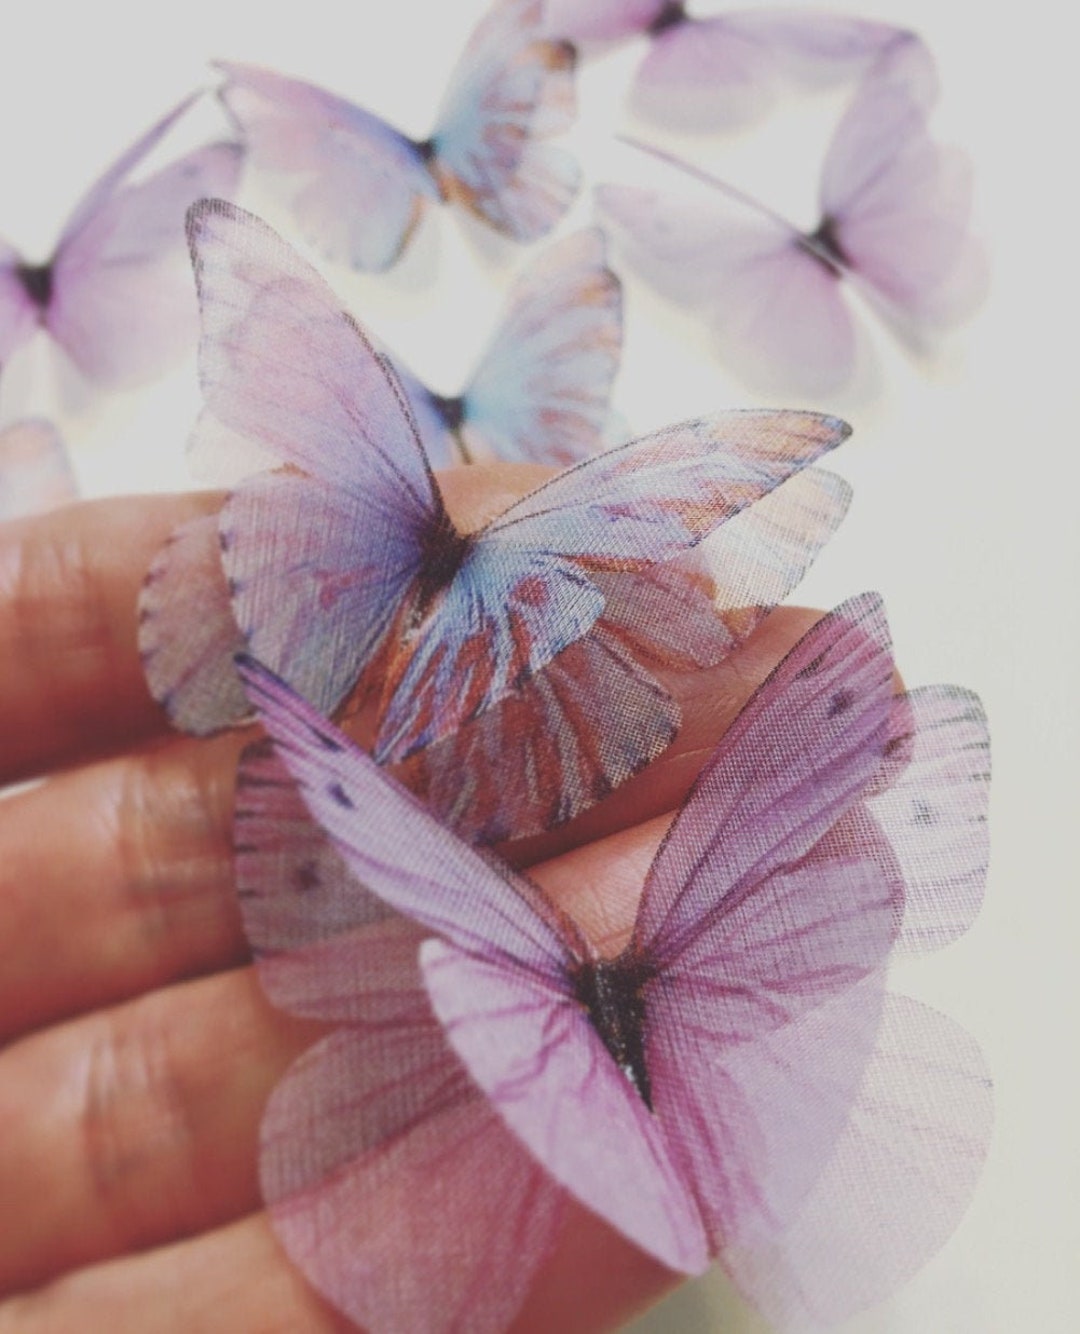 Reliant 5 Purple Butterflies, 12ct.